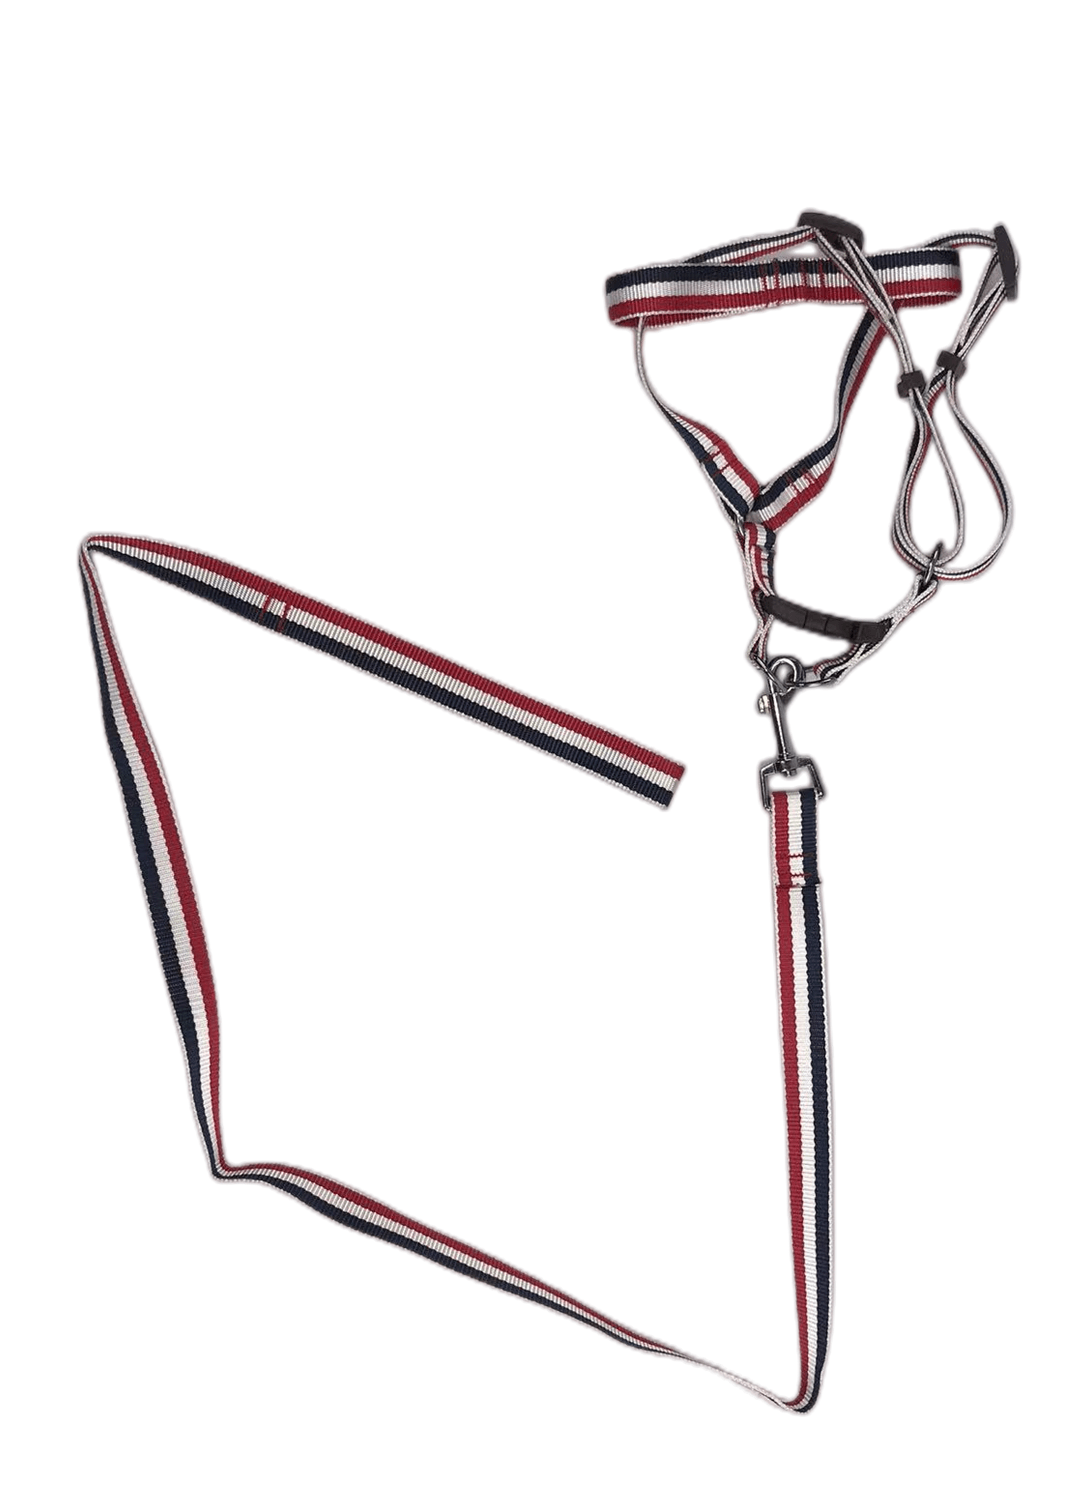 2 X Large Pet Dog Harness Collar leash lead